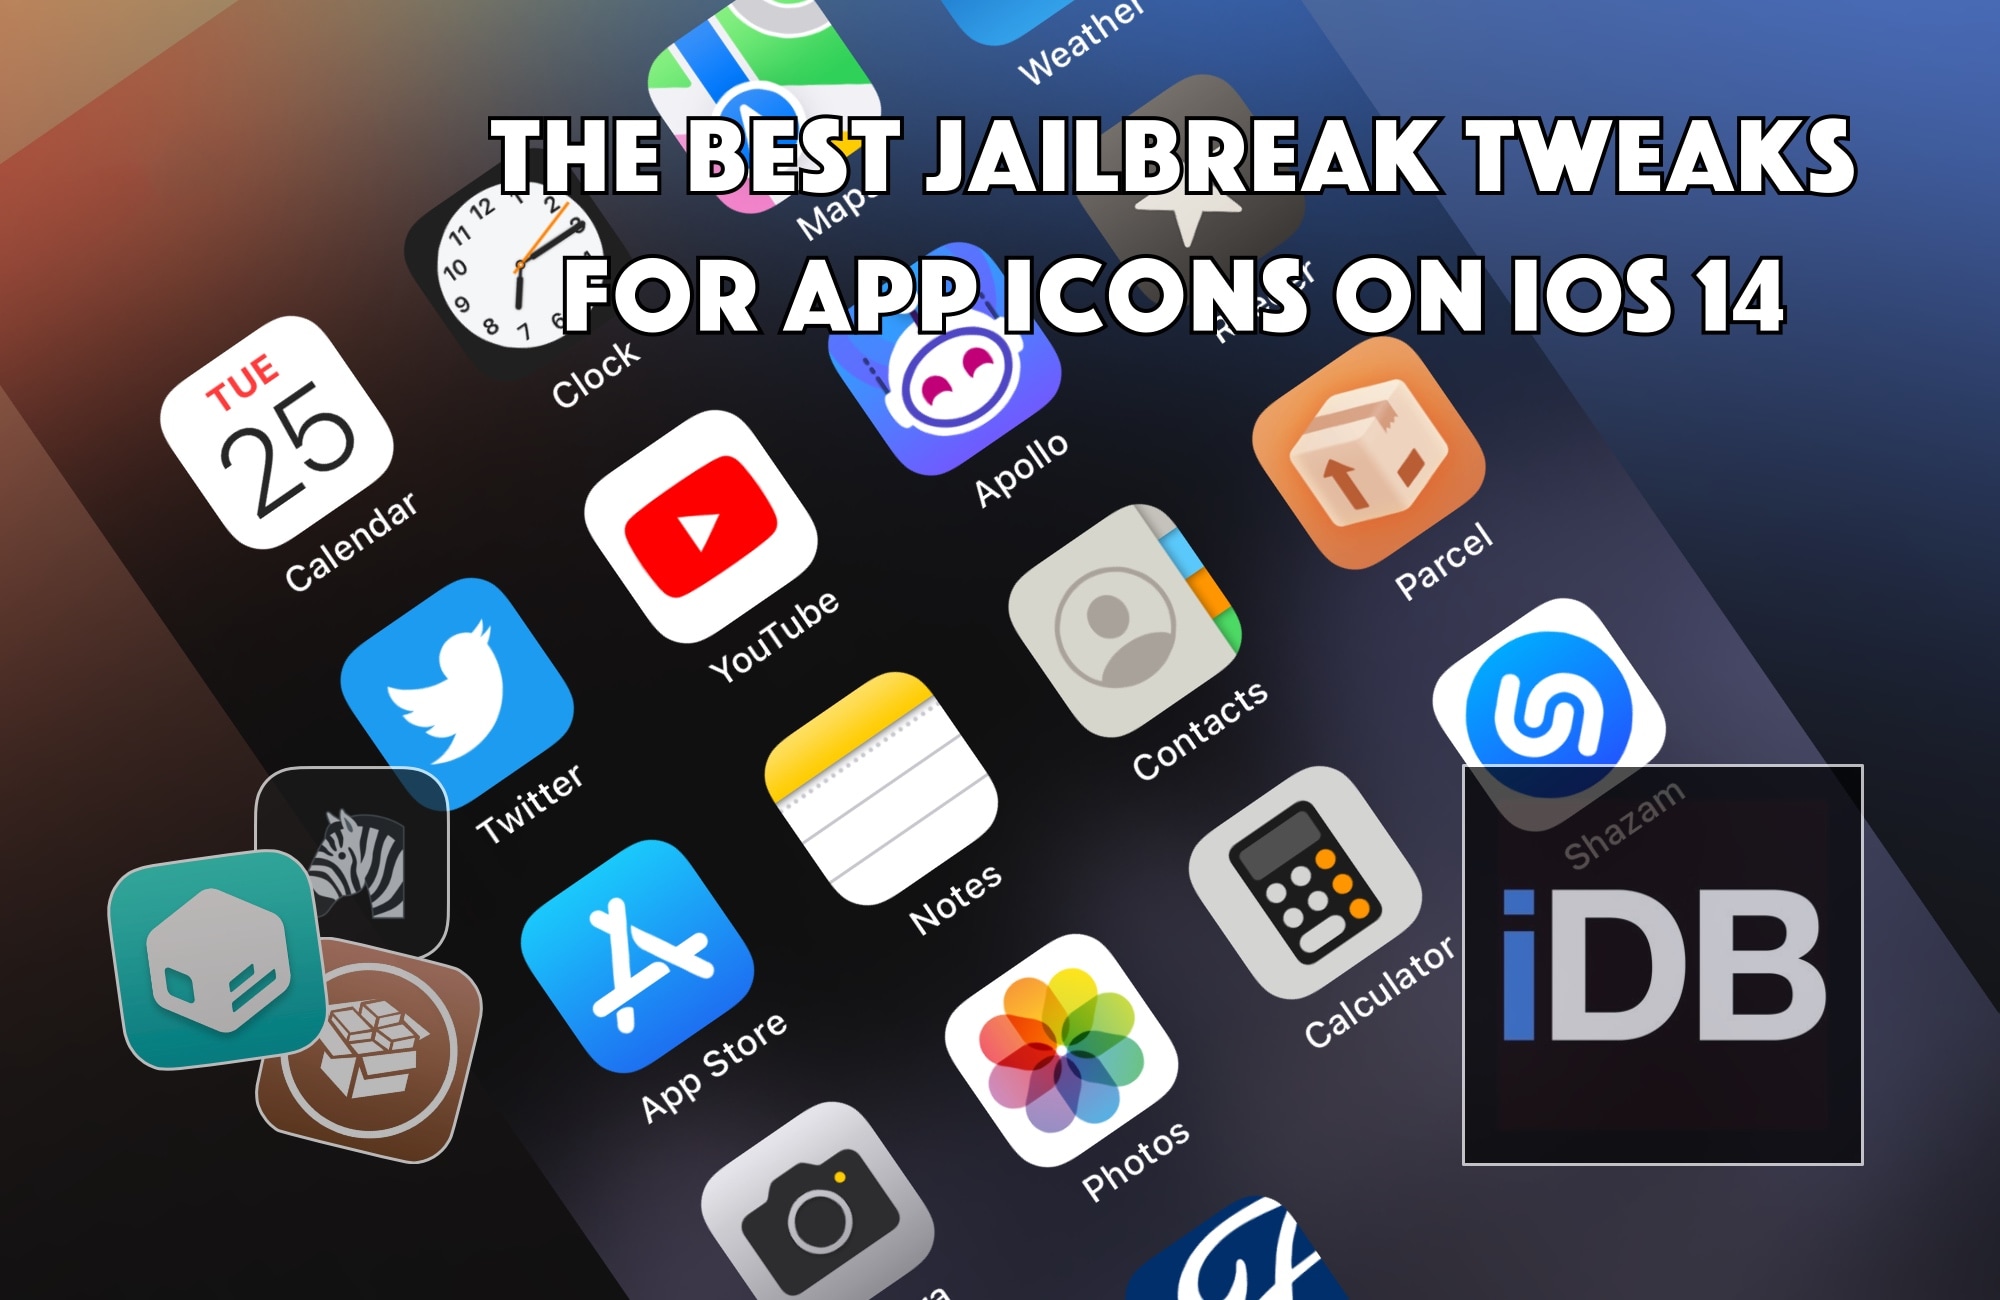 App icon jailbreak tweak roundup.